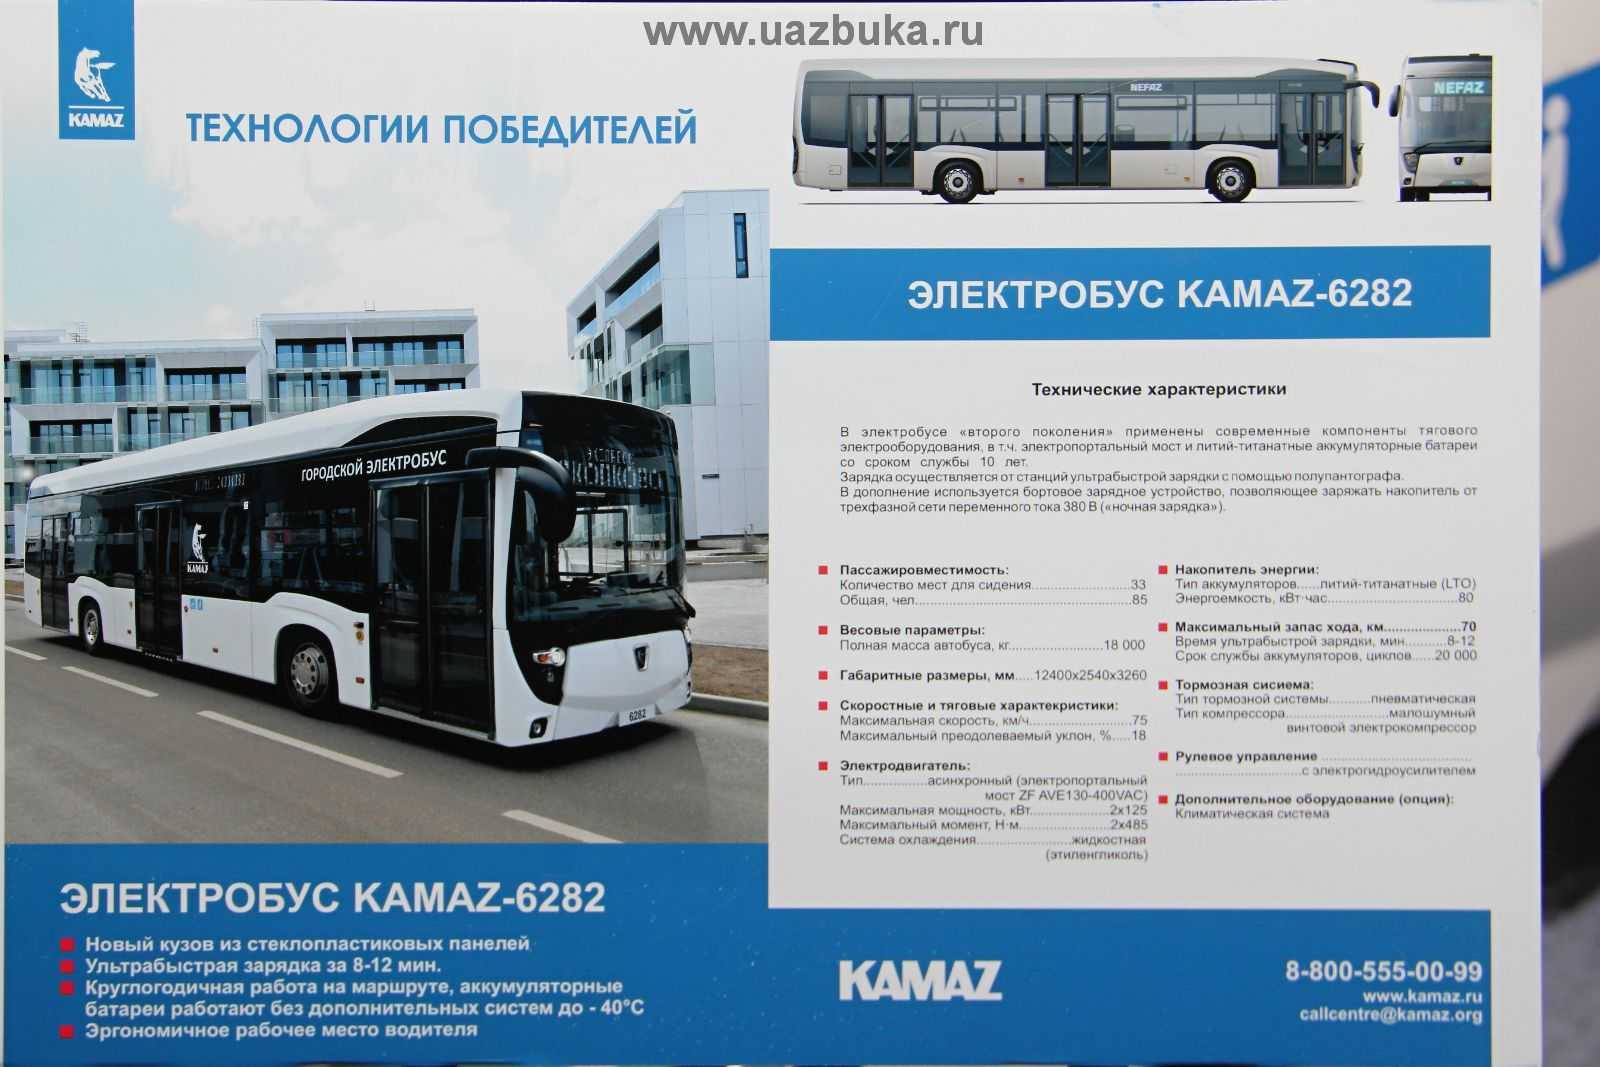 Электробусы работа. ЛИАЗ-6274 чертежи электробус. Электробус КАМАЗ-6282. Электробус КАМАЗ характеристики технические. Электробус КАМАЗ-6282 схема.